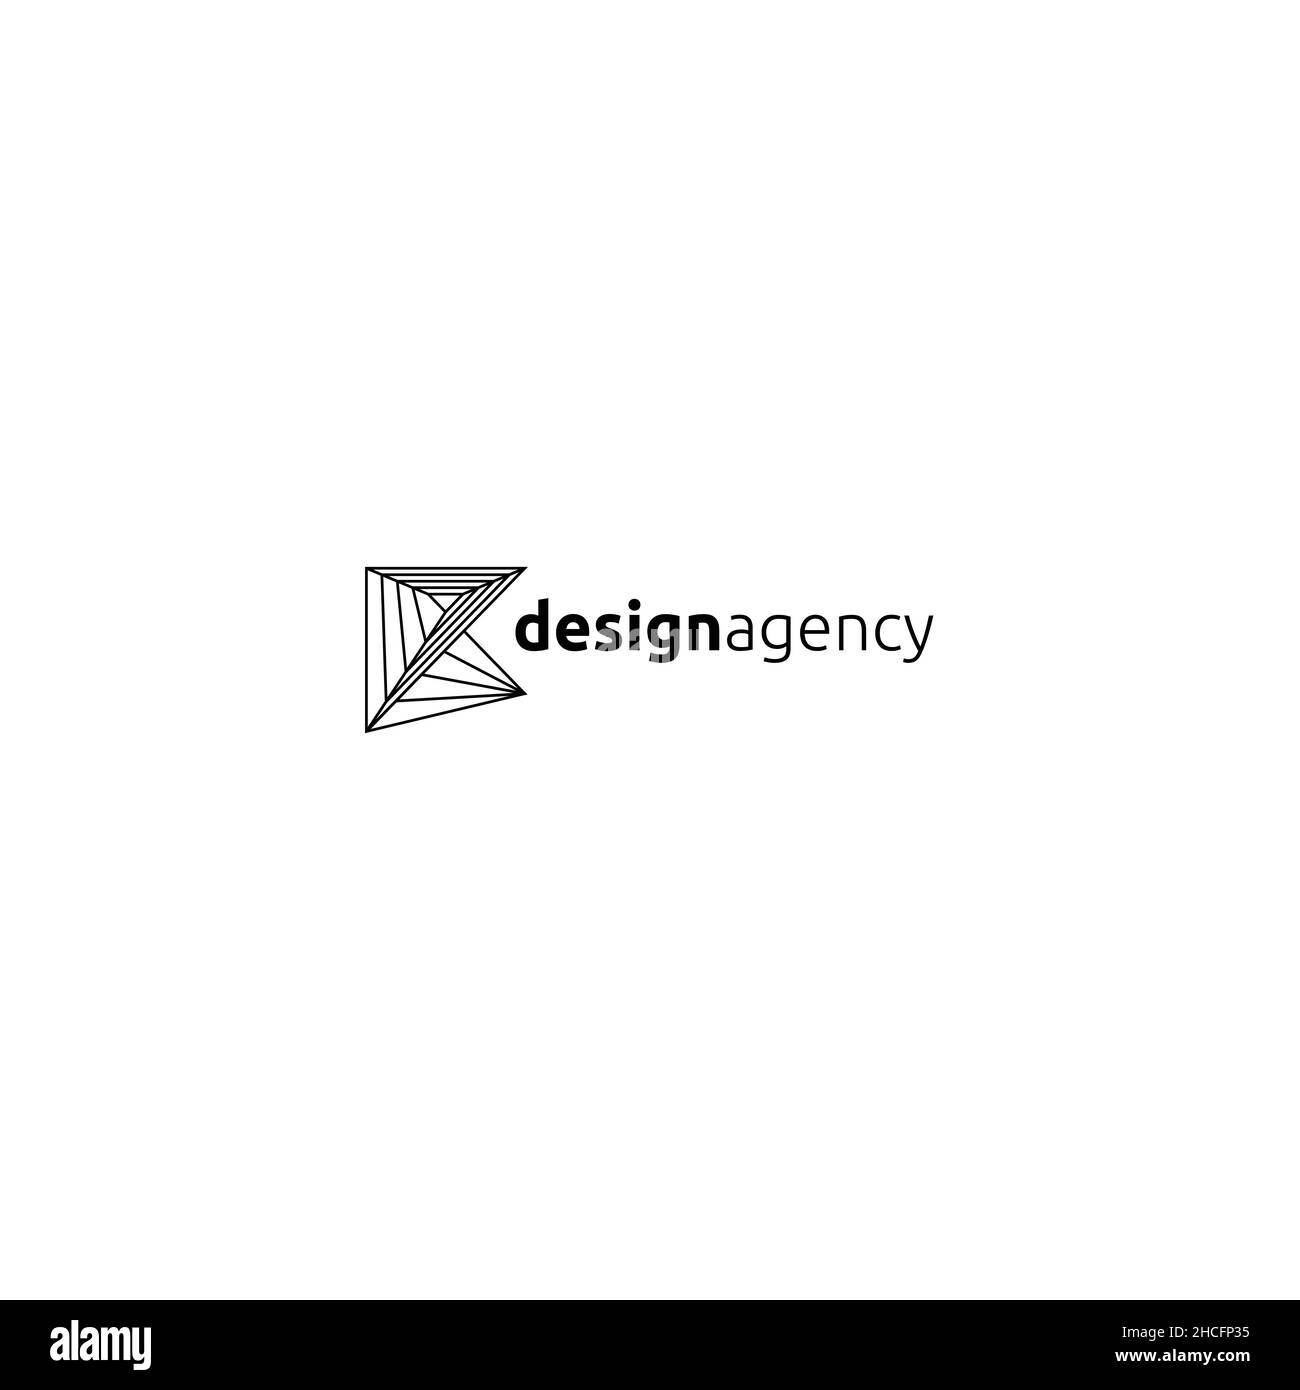 Minimalist flat Design Agency approach logo design Stock Vector